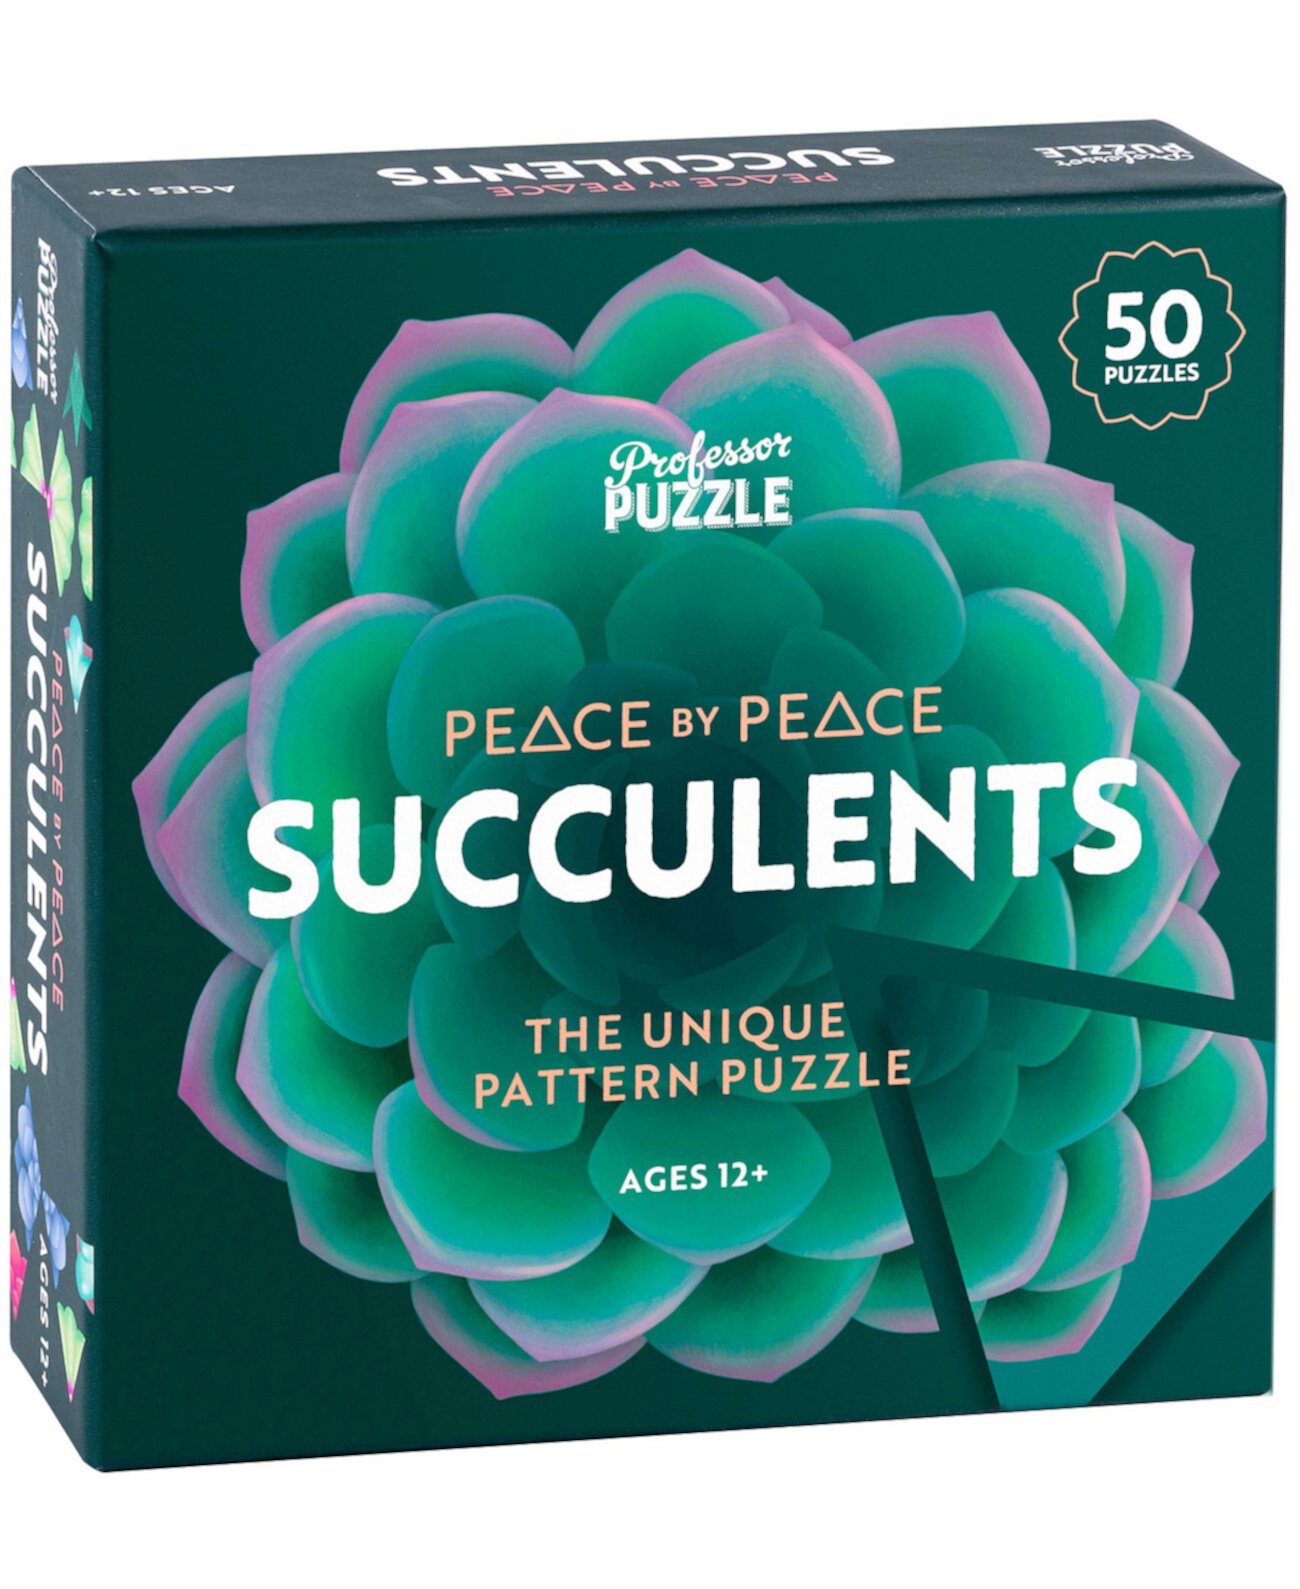 Peace by Peace Succulents - набор пазлов с уникальным узором, 96 предметов PROFESSOR PUZZLE